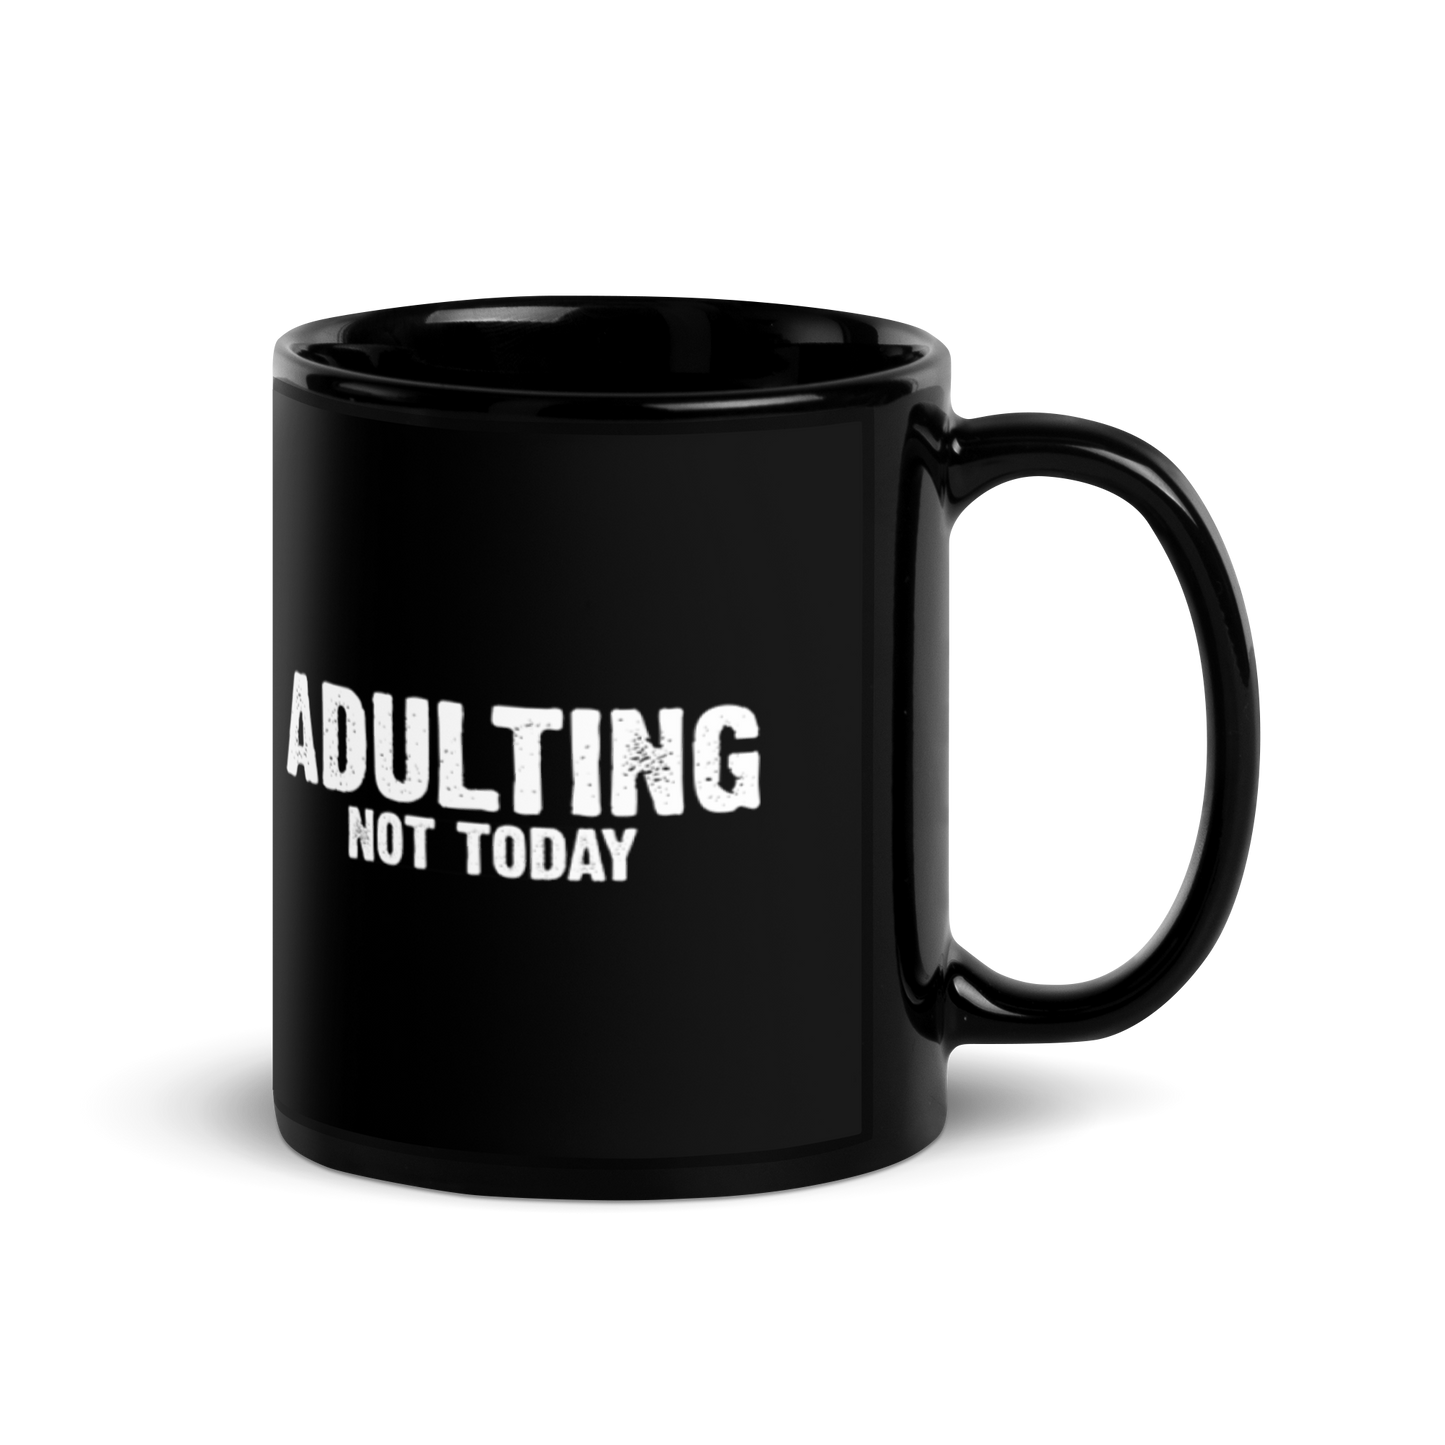 Adulting, Not Today - Funny Mug